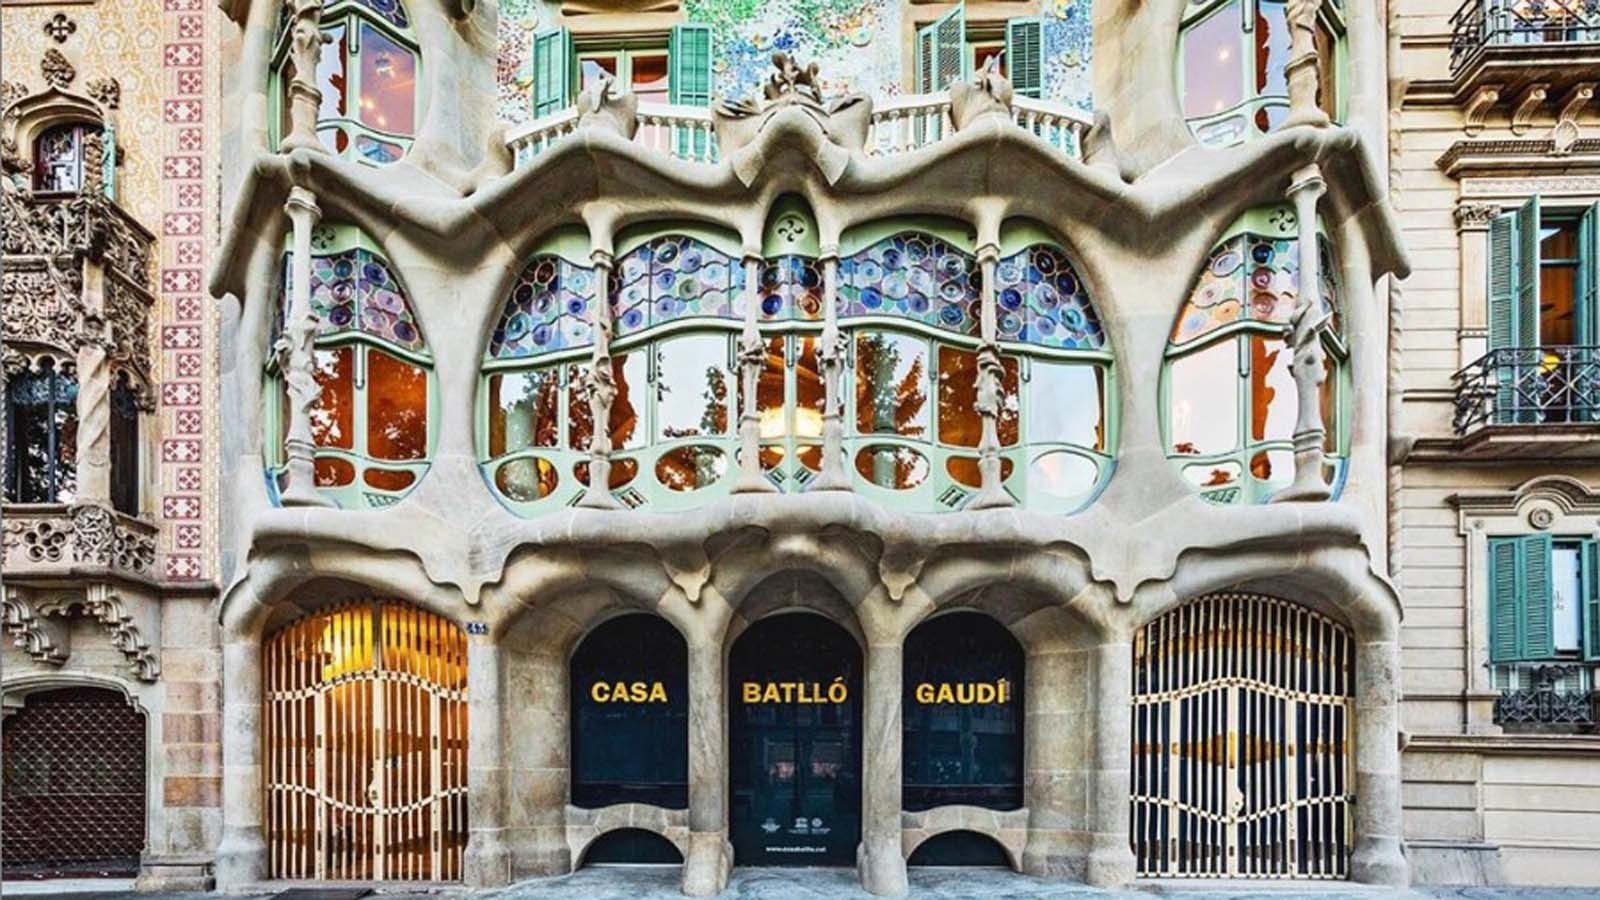 Private Tour Gaudí, half day